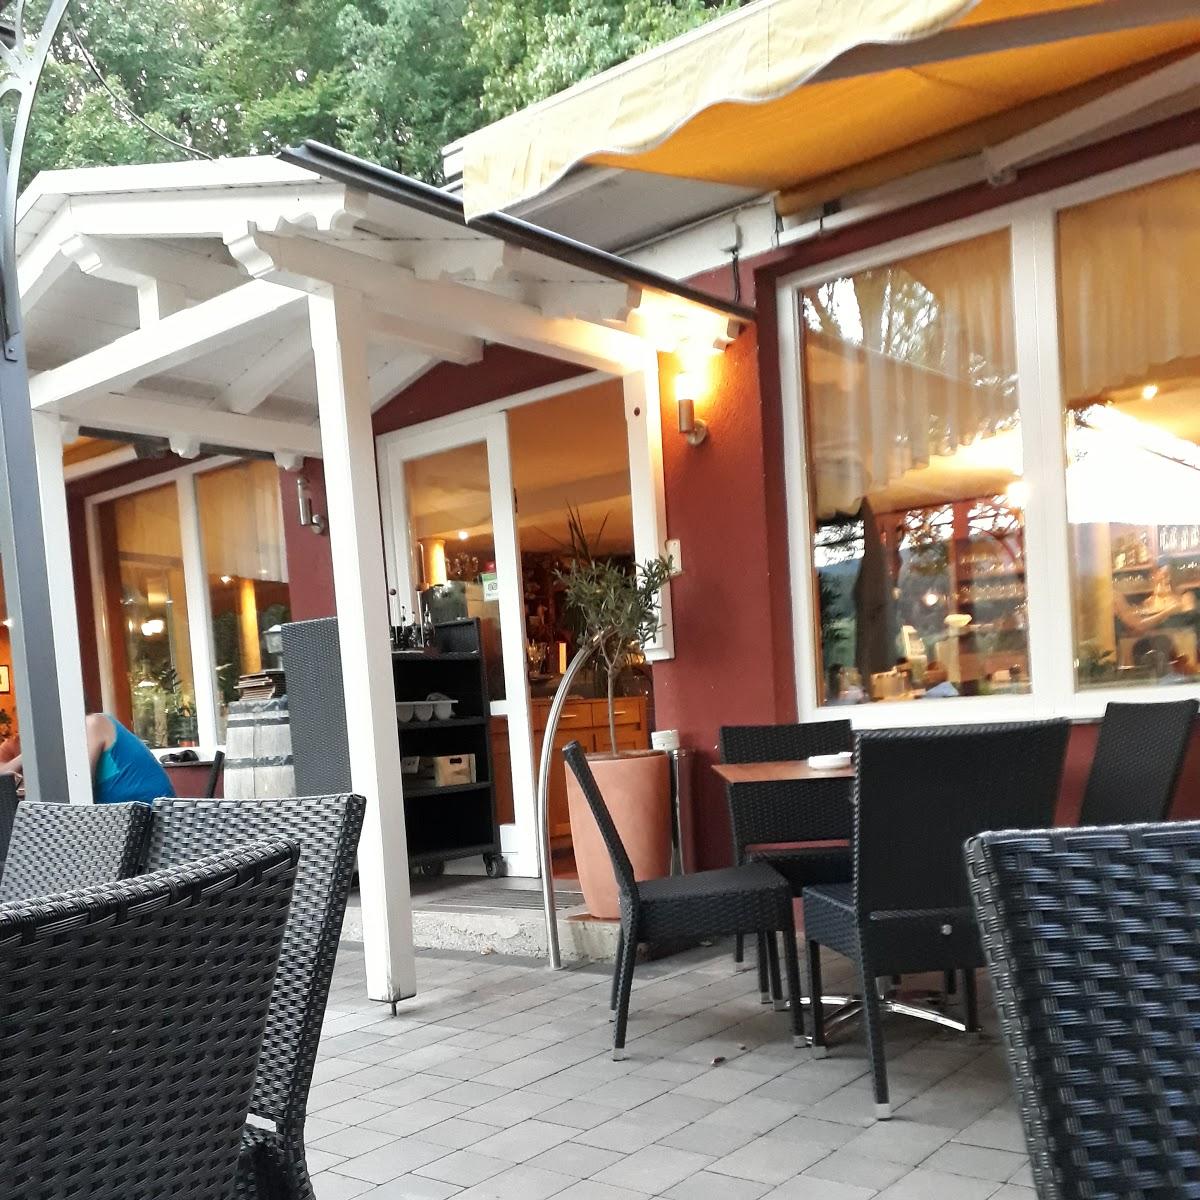 Restaurant "Ristorante Paradiso" in Wald